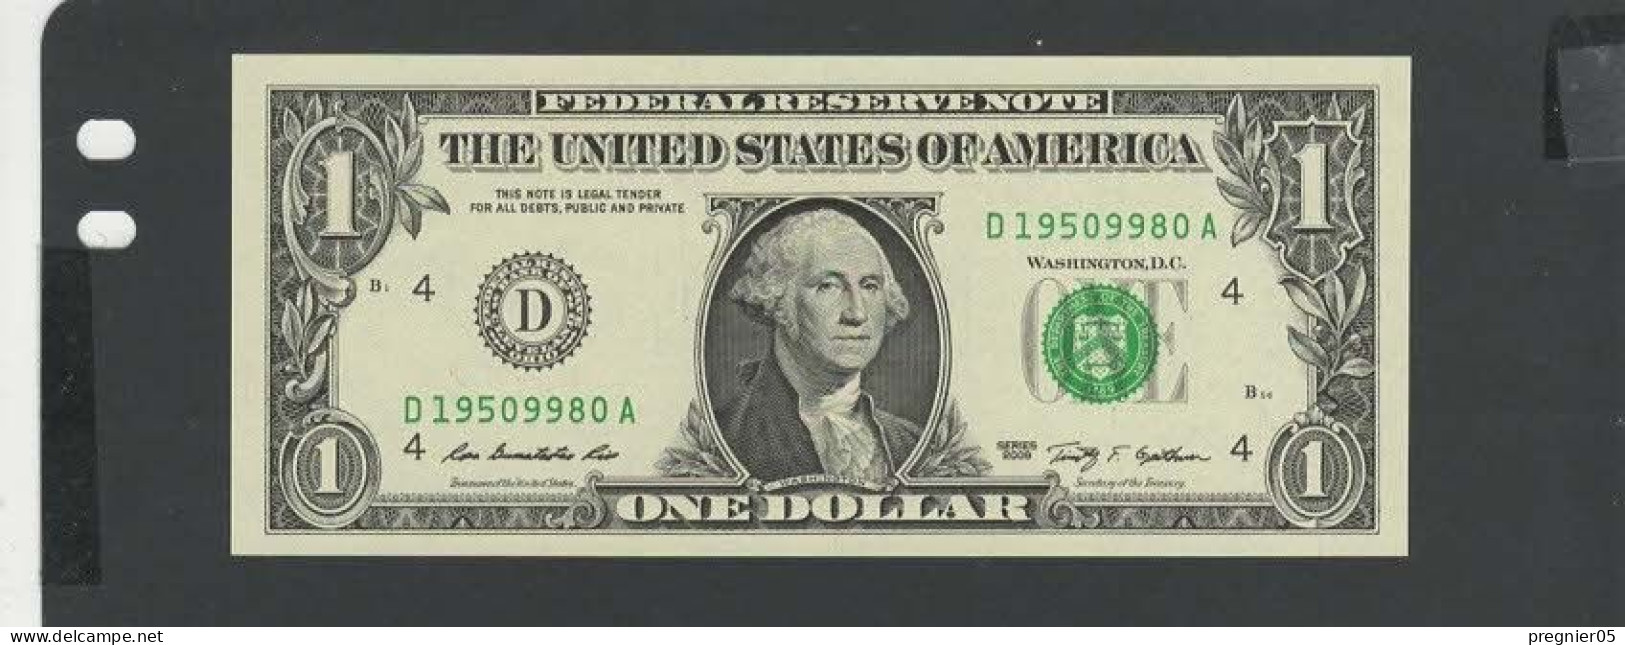 USA - Billet 1 Dollar 2009 NEUF/UNC P.529 § D - Billets De La Federal Reserve (1928-...)